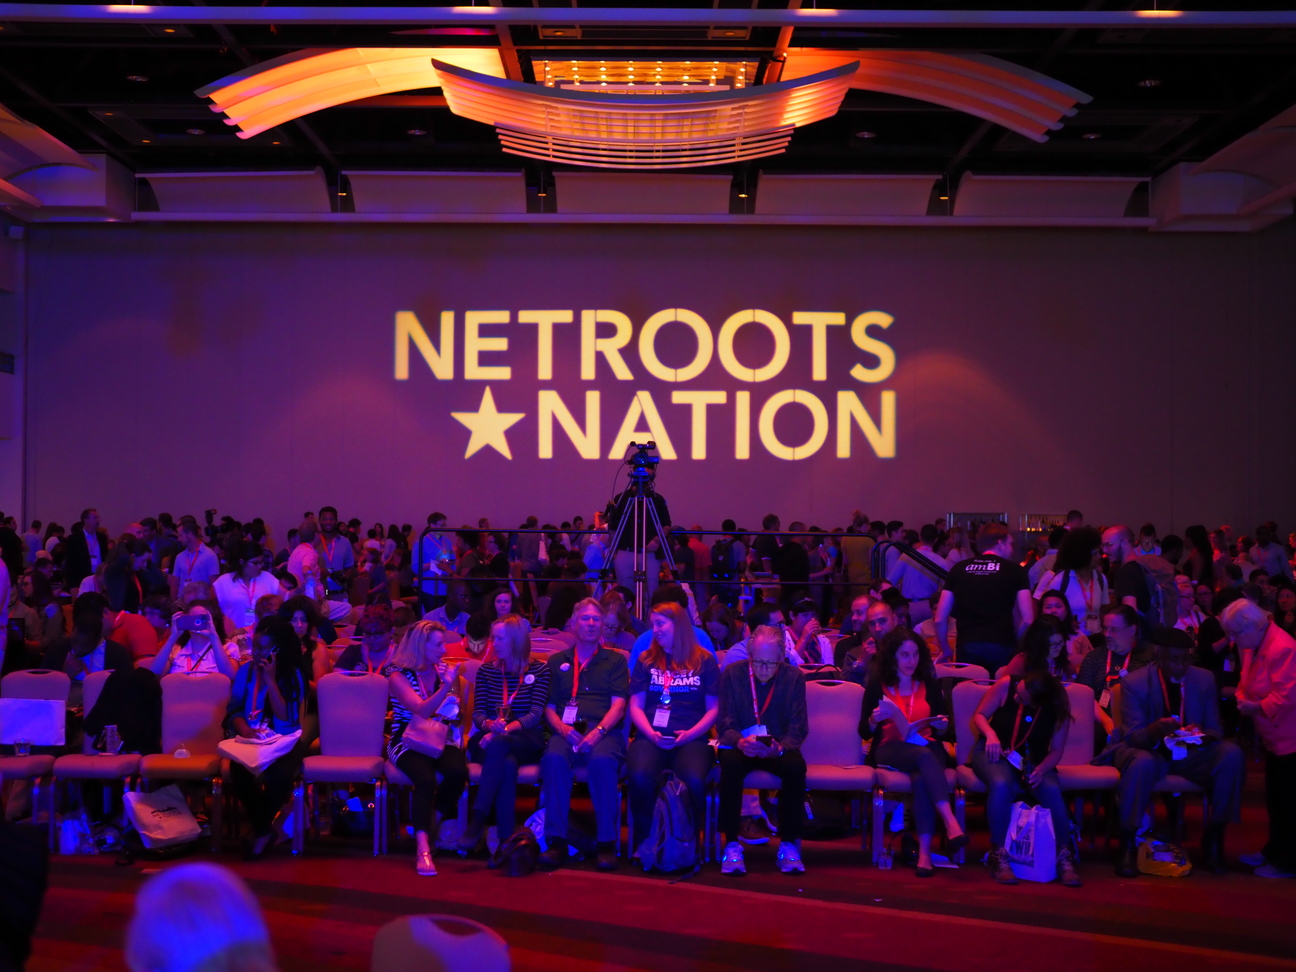 Netroots Nation 2017 opening plenary